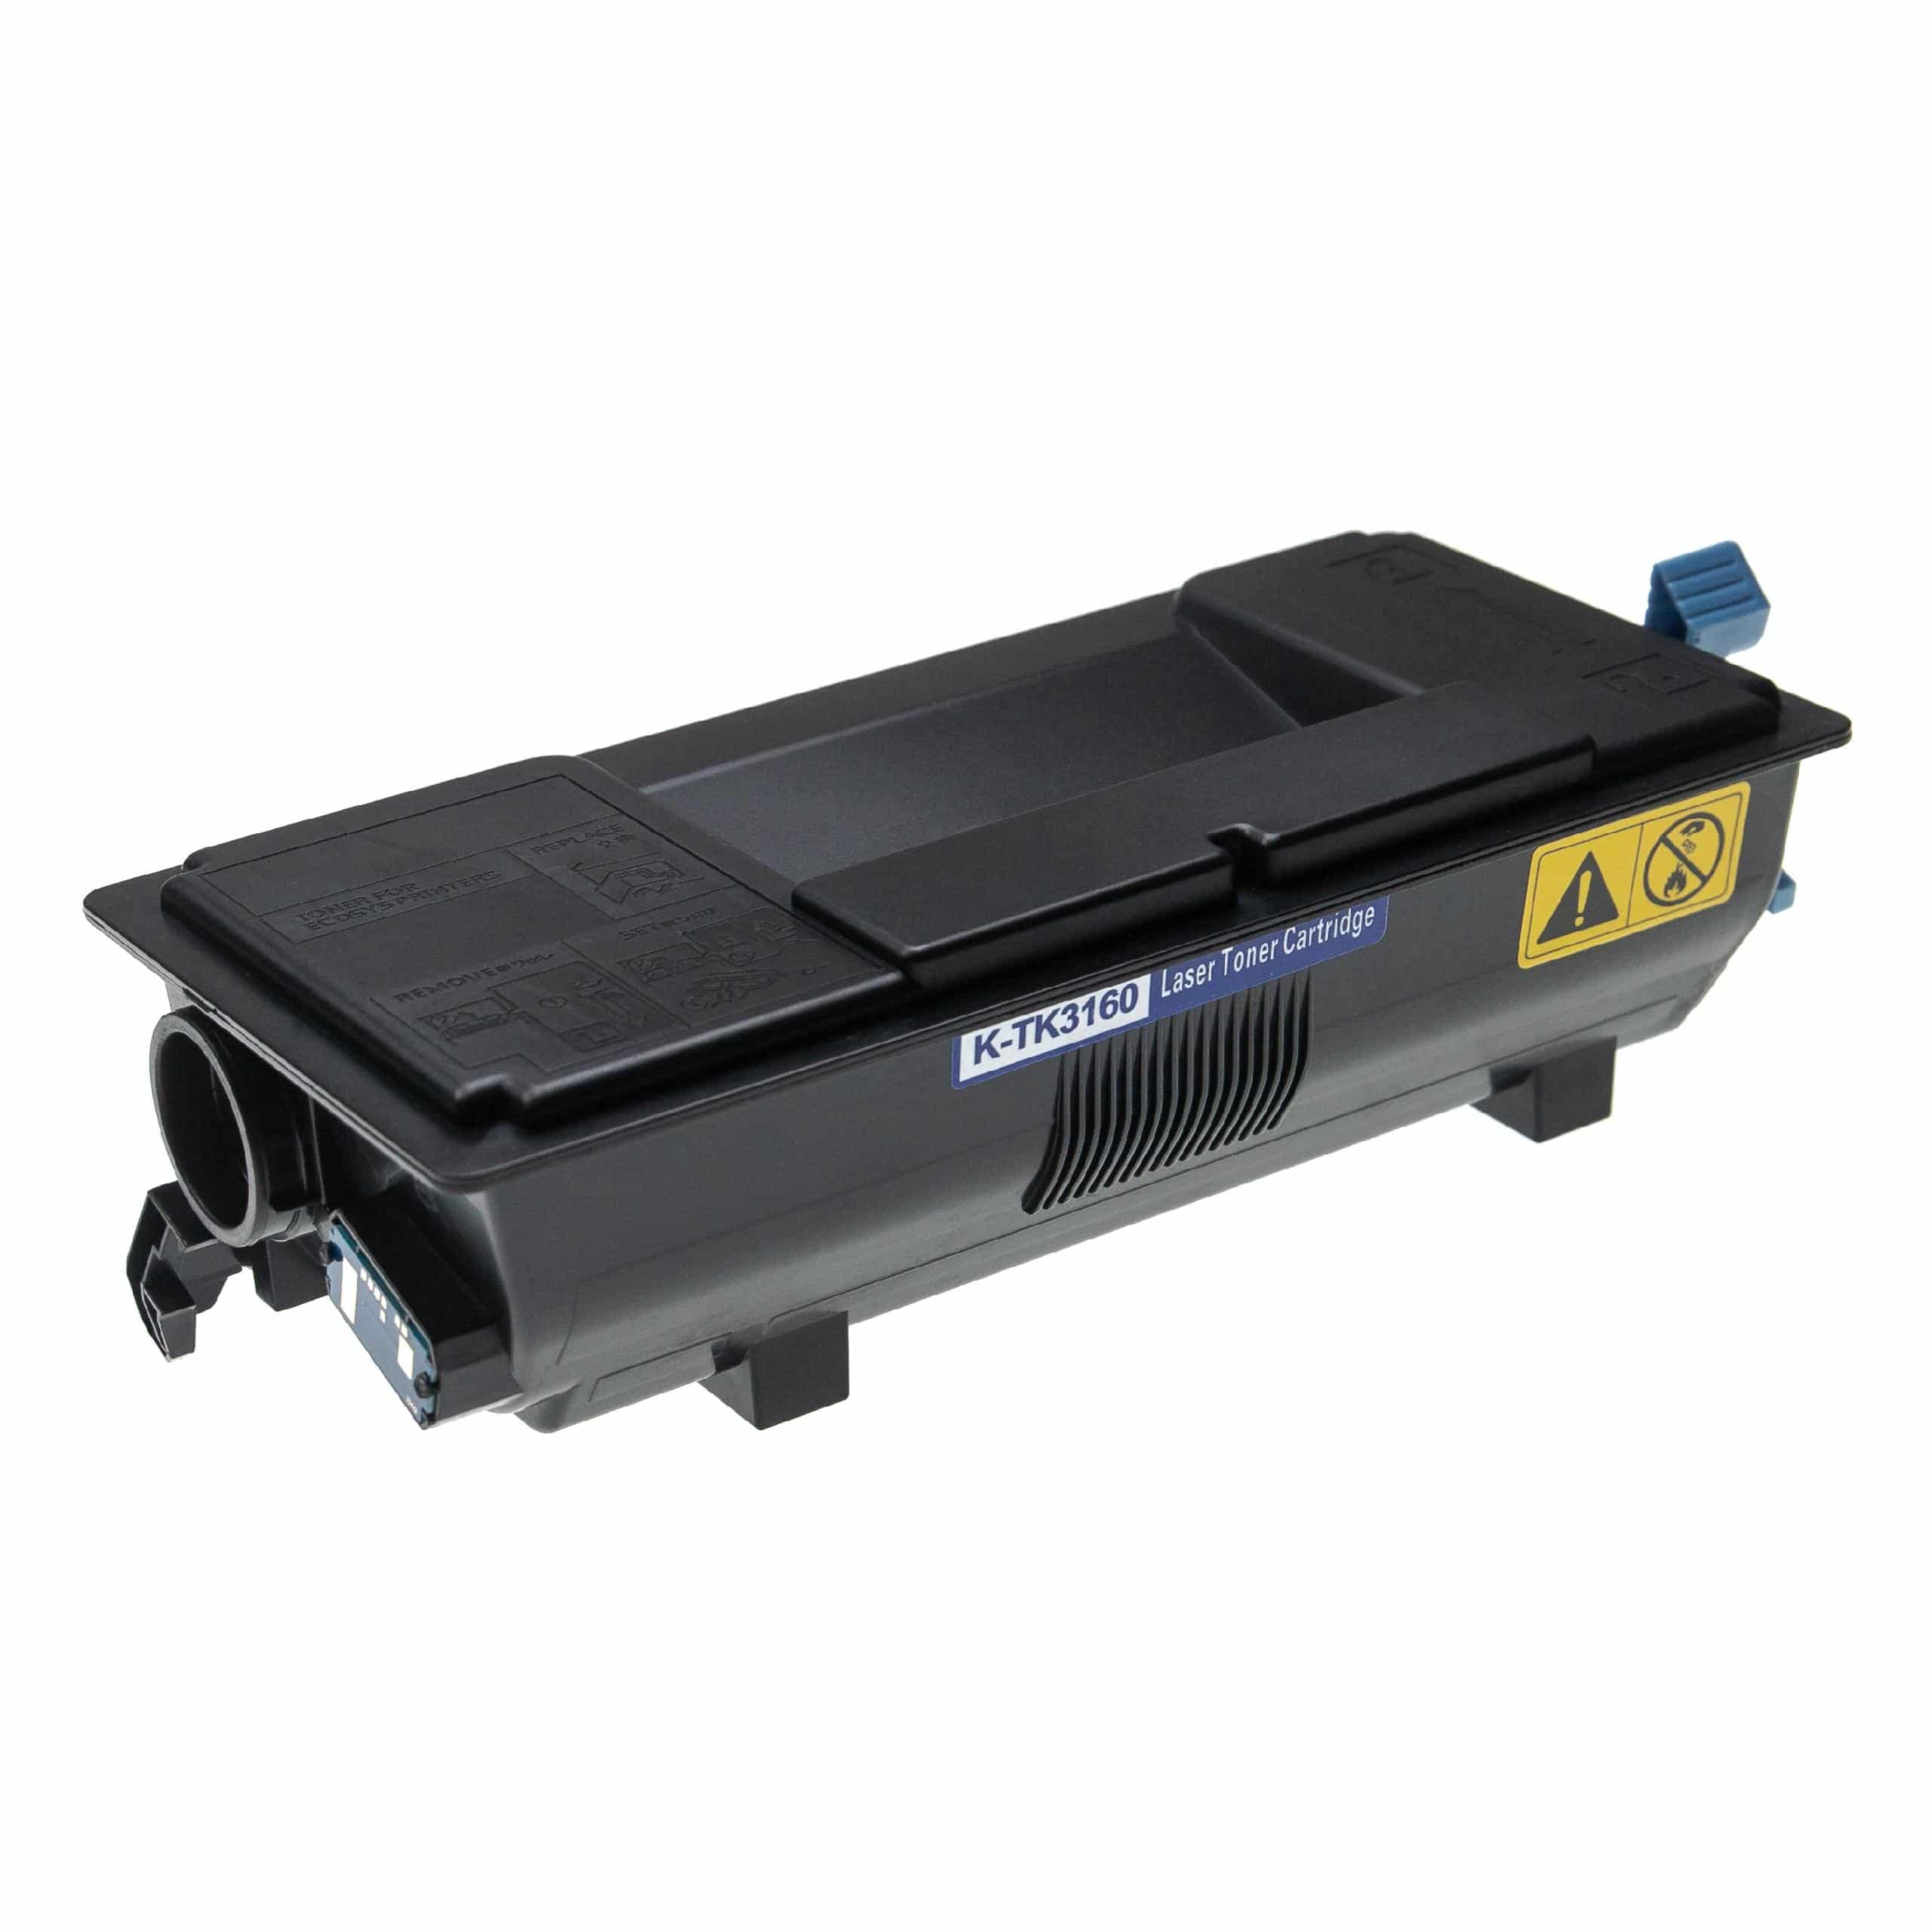 3x Toner replaces Kyocera TK-3160 for Kyocera Printer + Waste Toner Container, Black